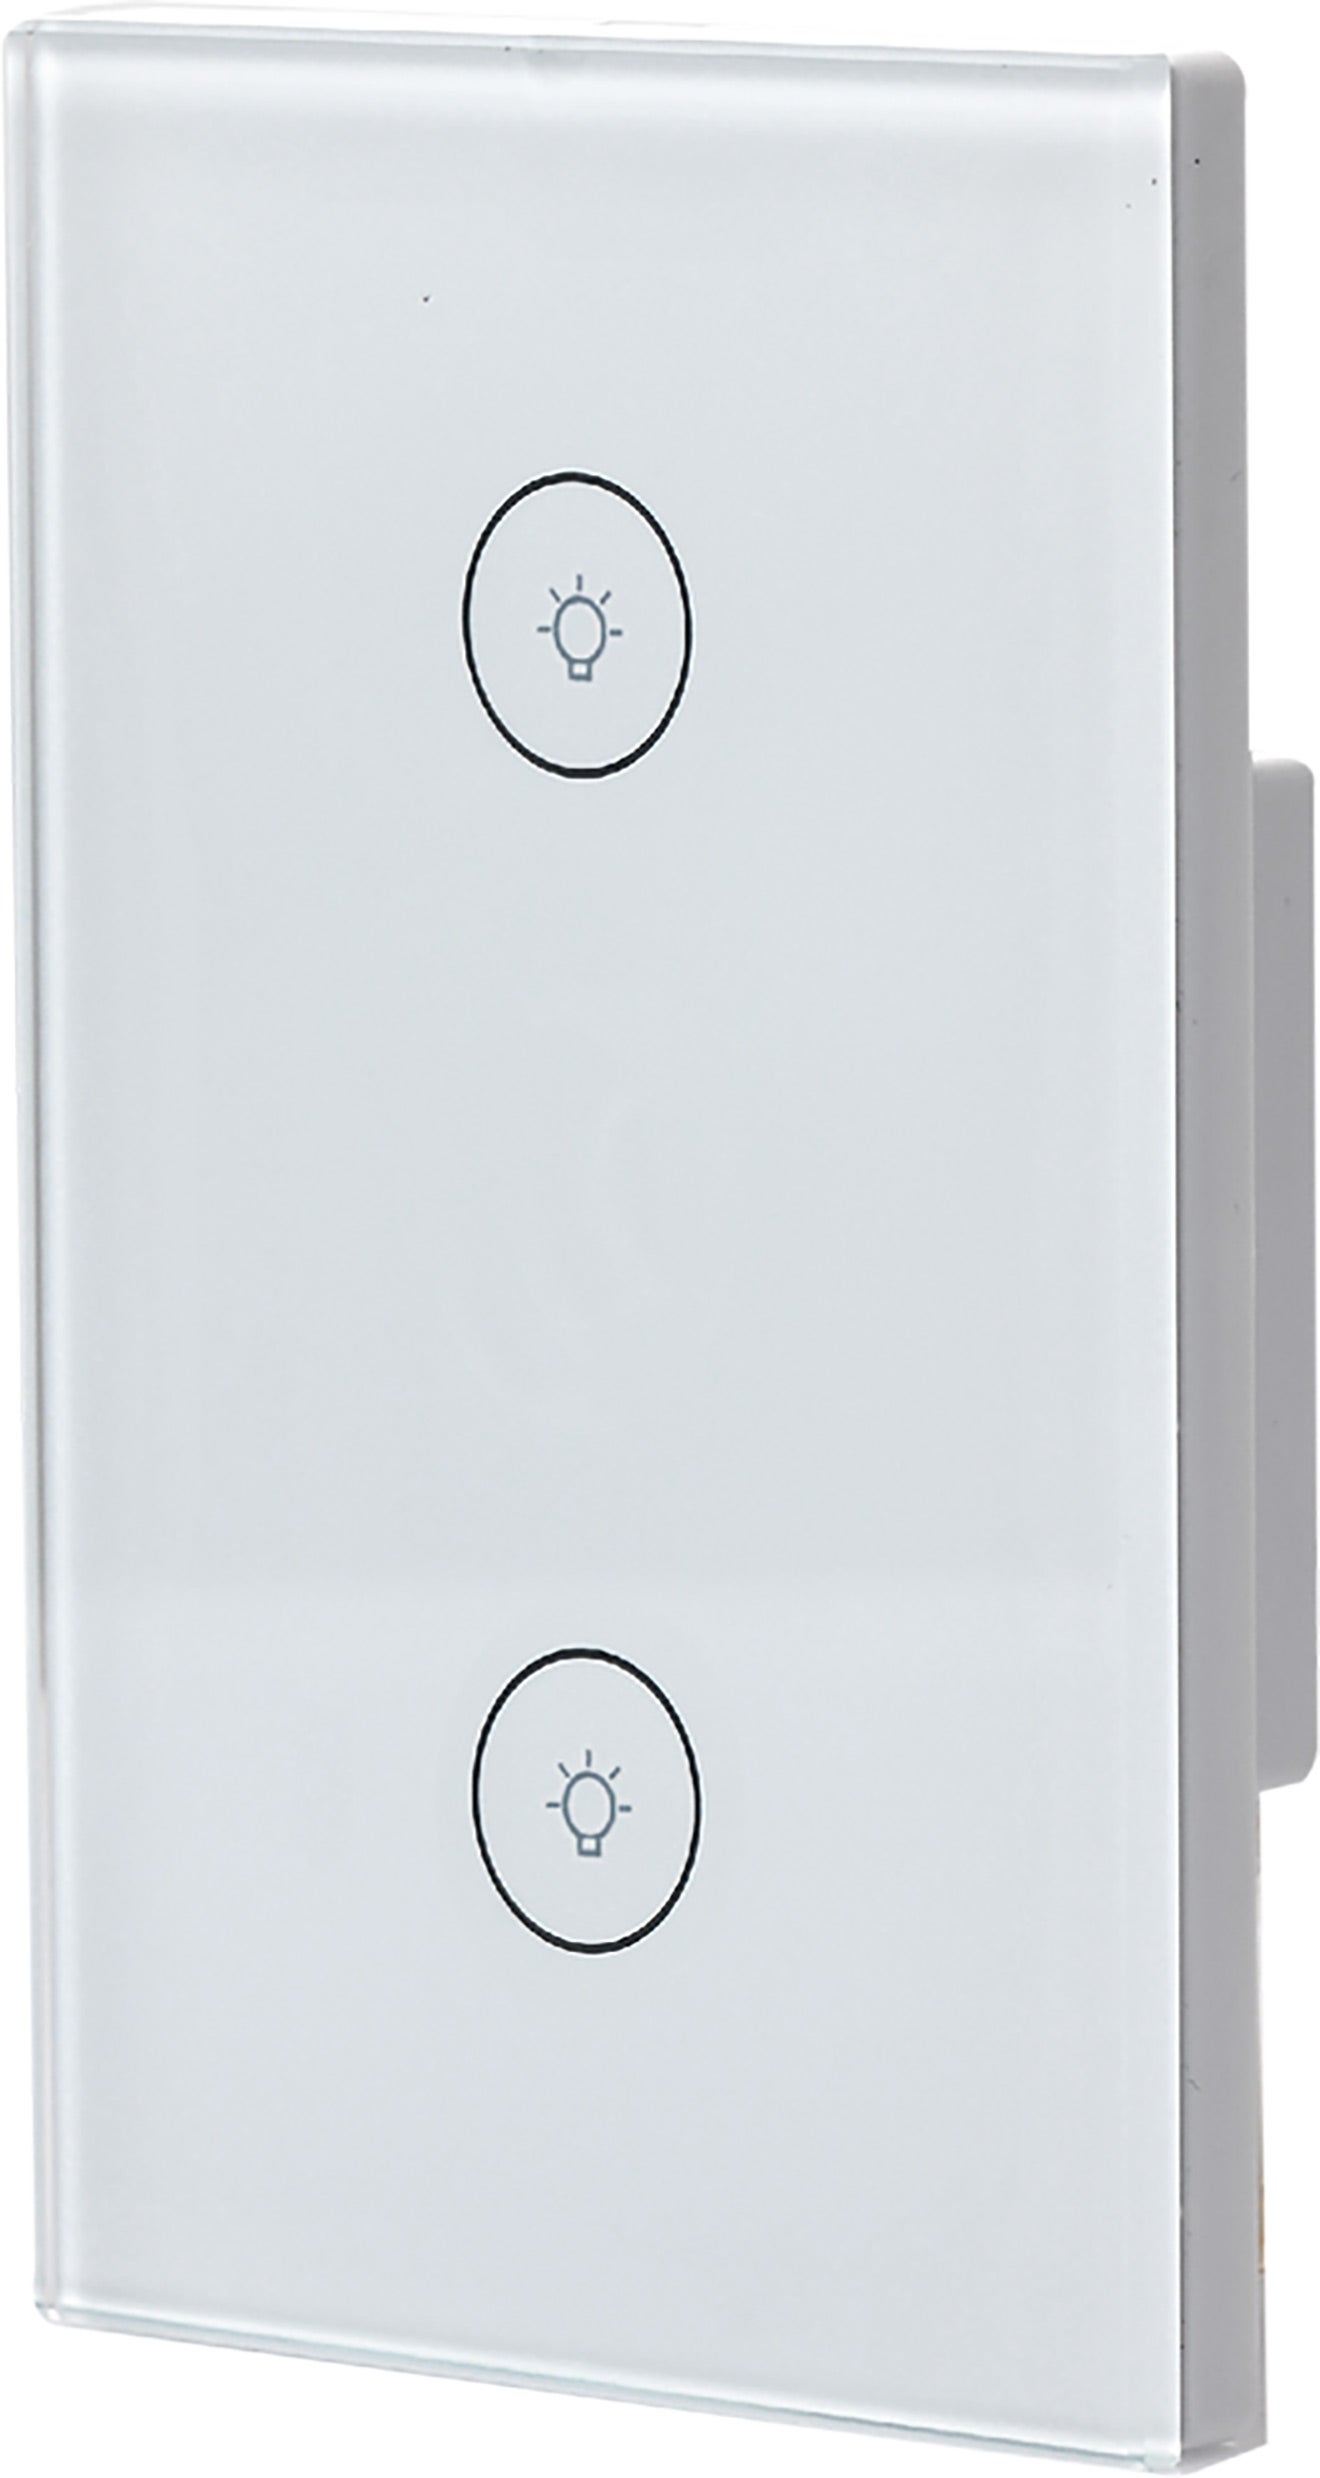 SmartVU Home™ Smart Touch Light Switch - Double